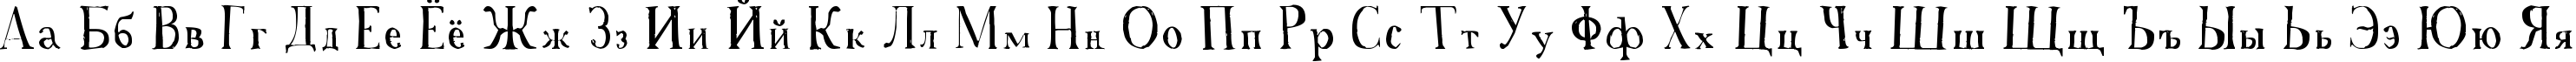 Пример написания русского алфавита шрифтом A Font with Serifs